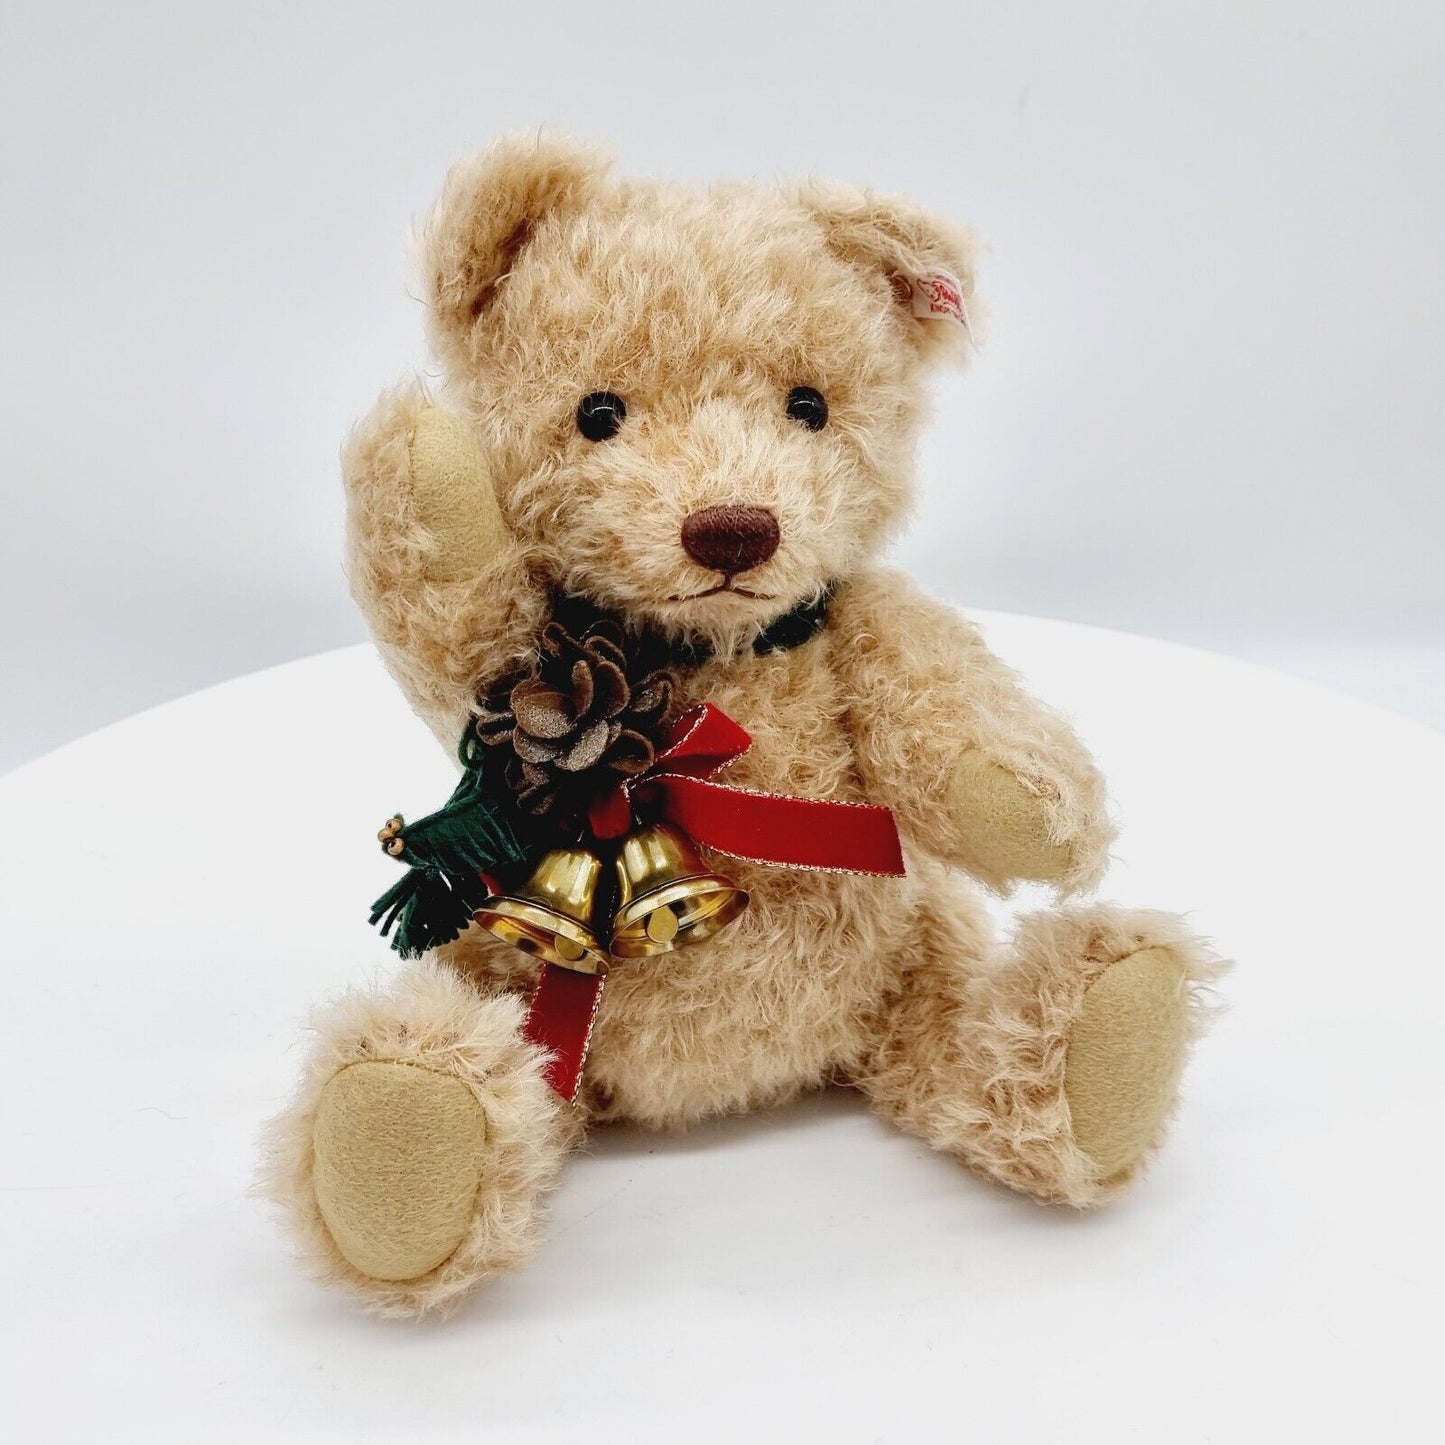 Steiff 034275 Teddybär Kiefer Weihnachten limitiert 1500 aus 2014 30 cm Mohair